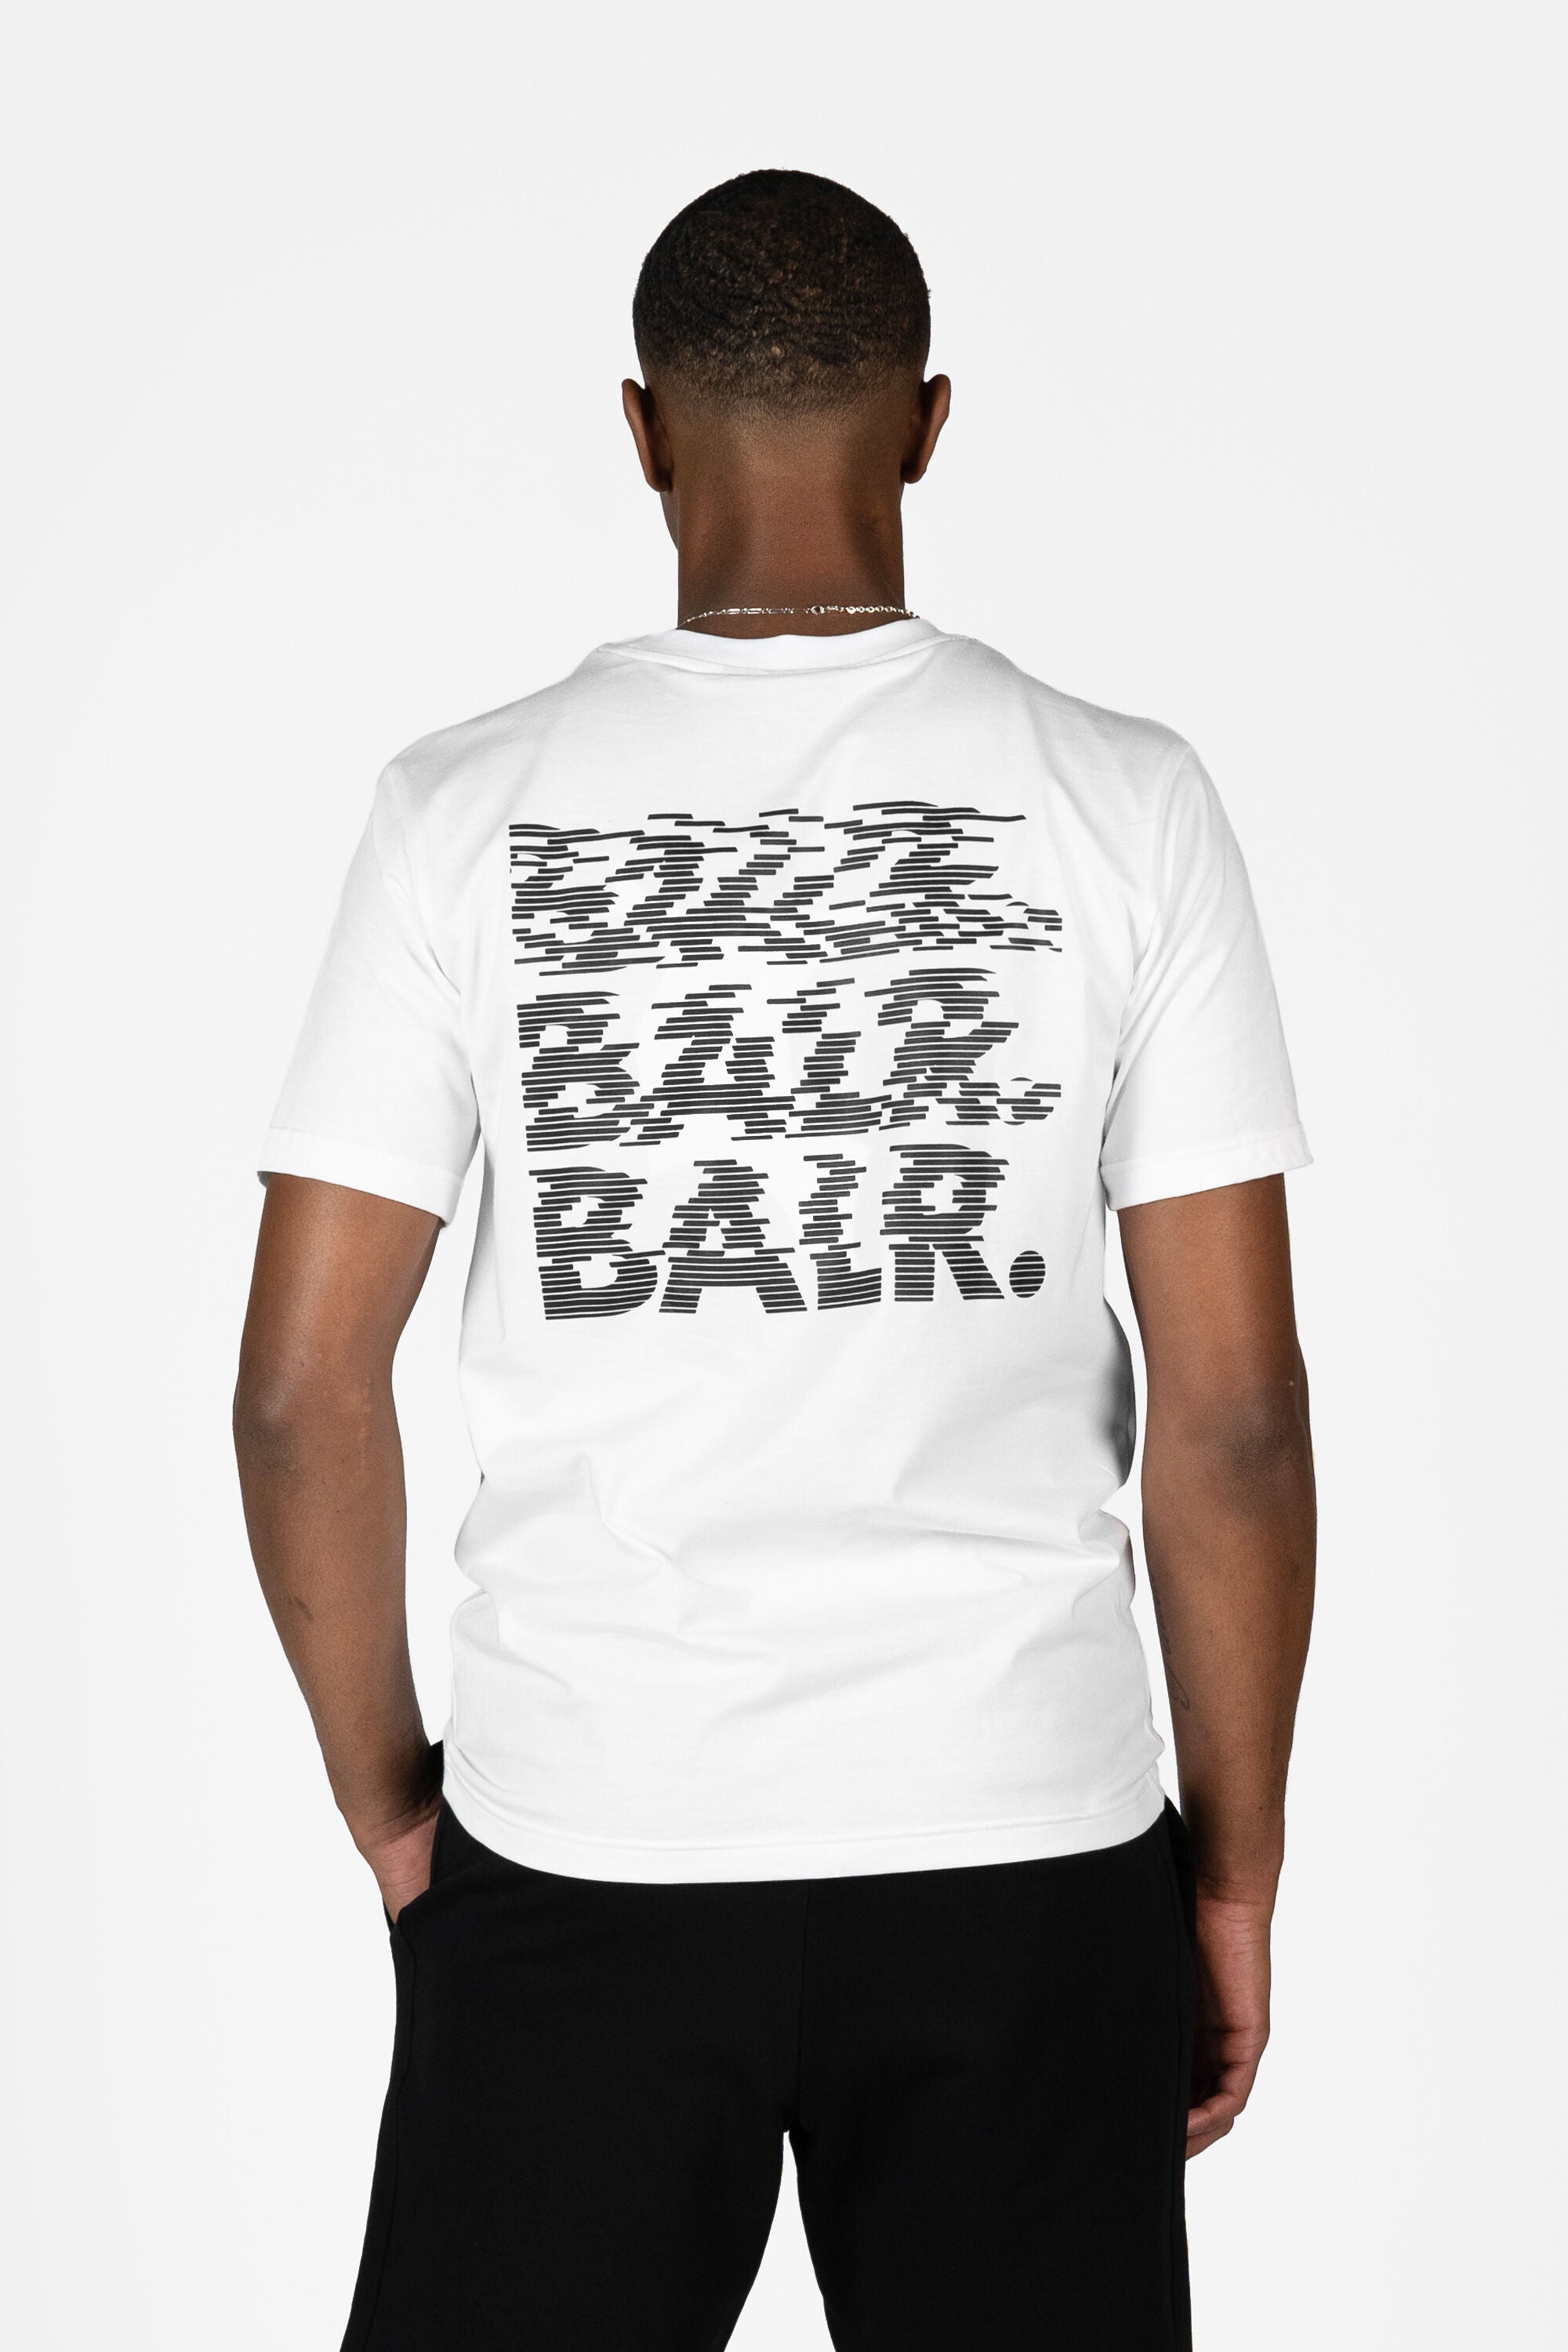 BALR. Glitch Regular Fit T-Shirt Bright White